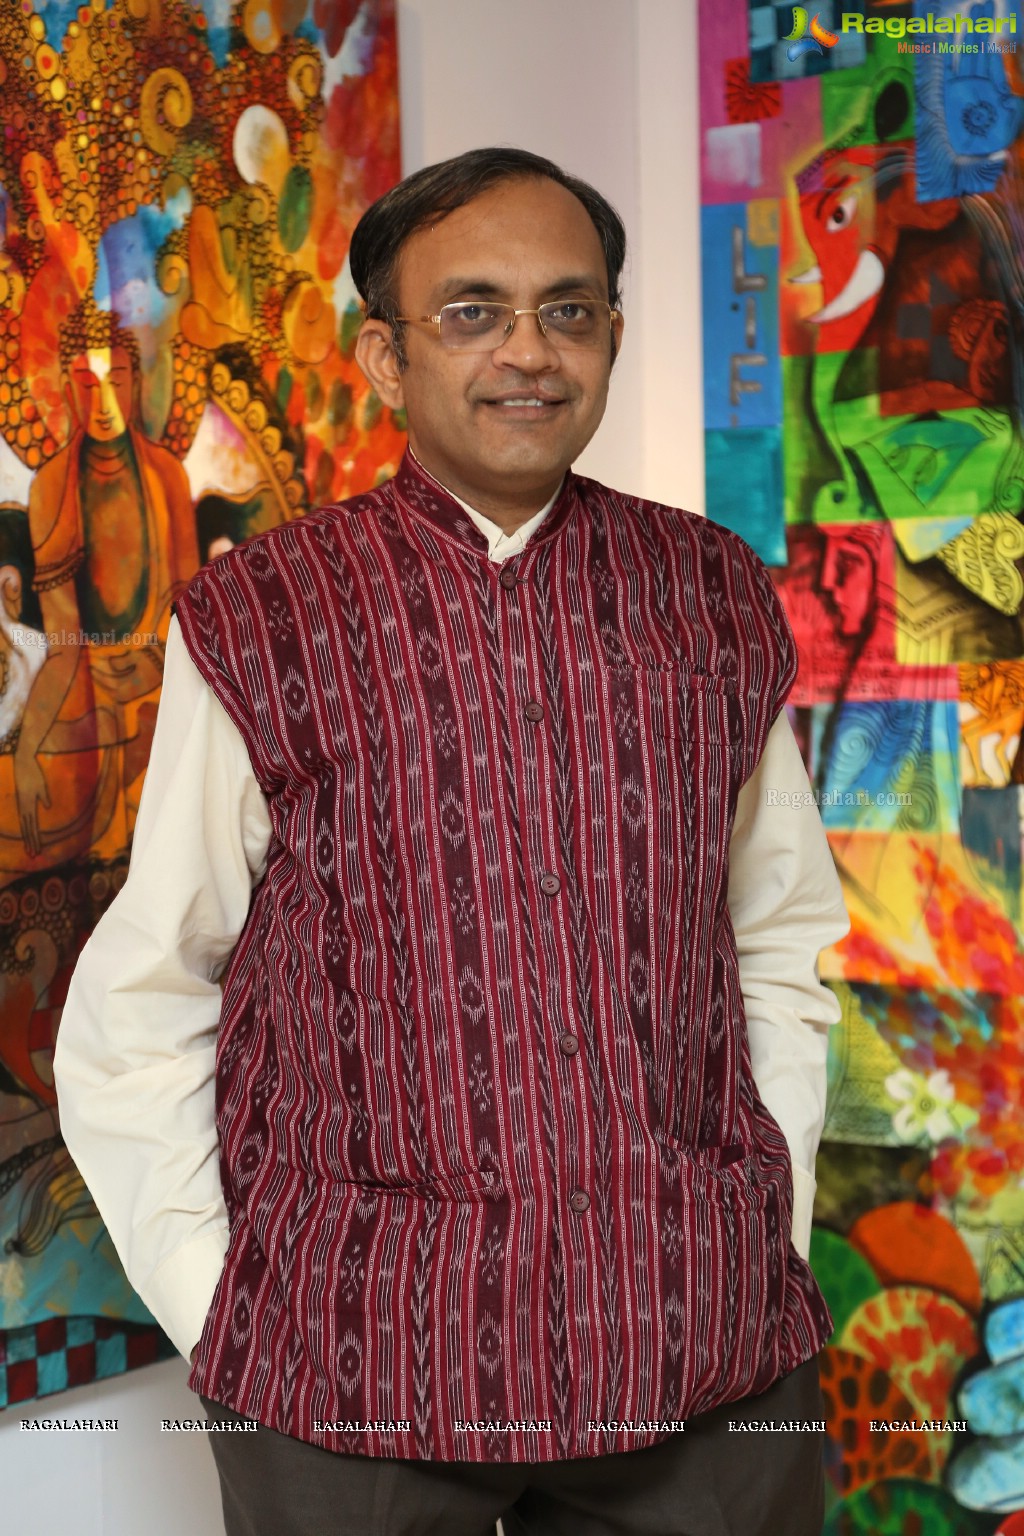 Raso Vaisaha Art Exhibition at Rainbow Art Gallery, Hyderabad